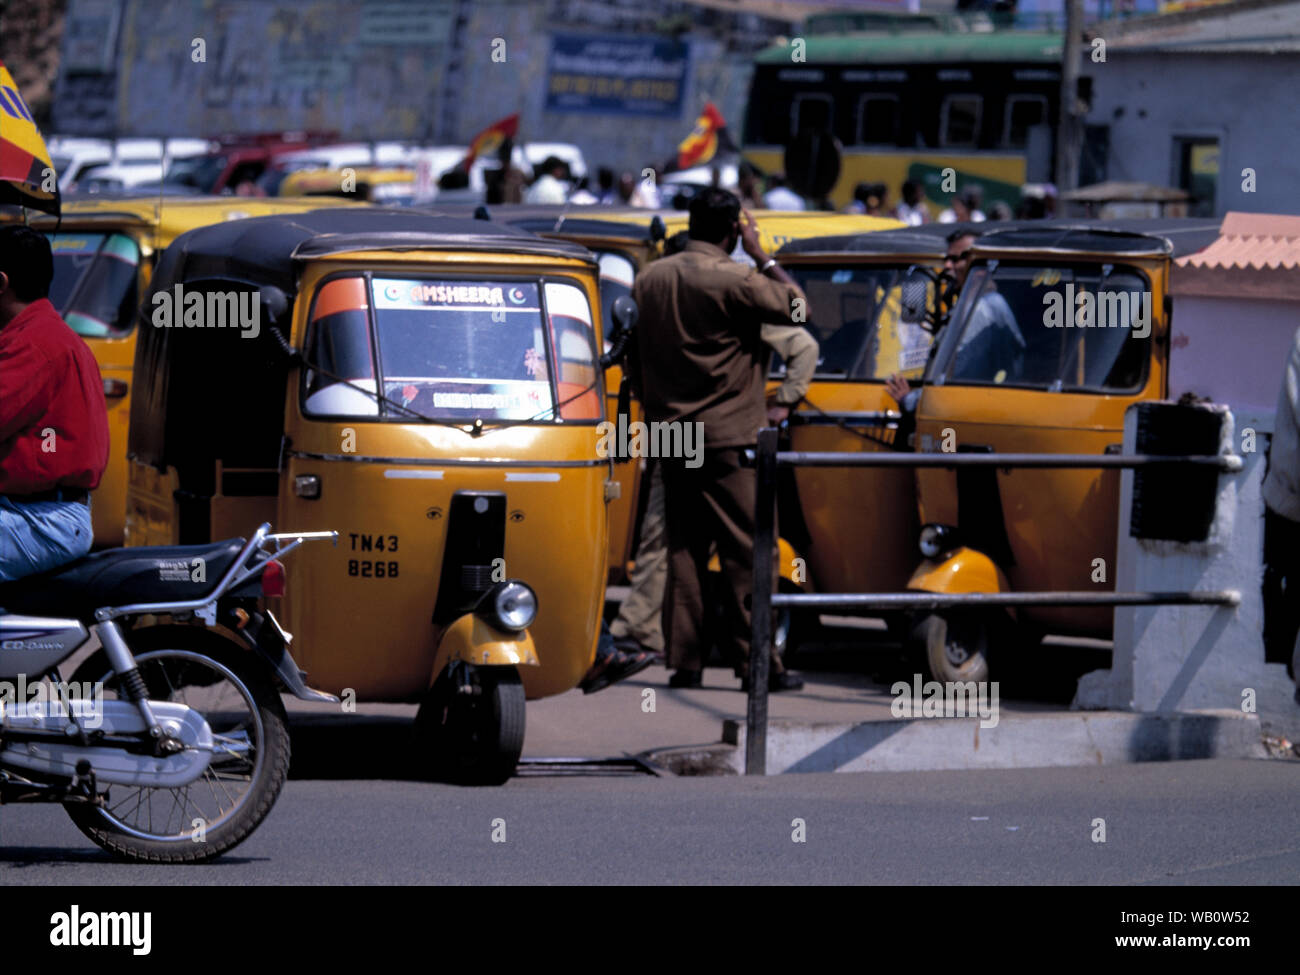 asia, asian, india, collection of motorised rickshaws Stock Photo